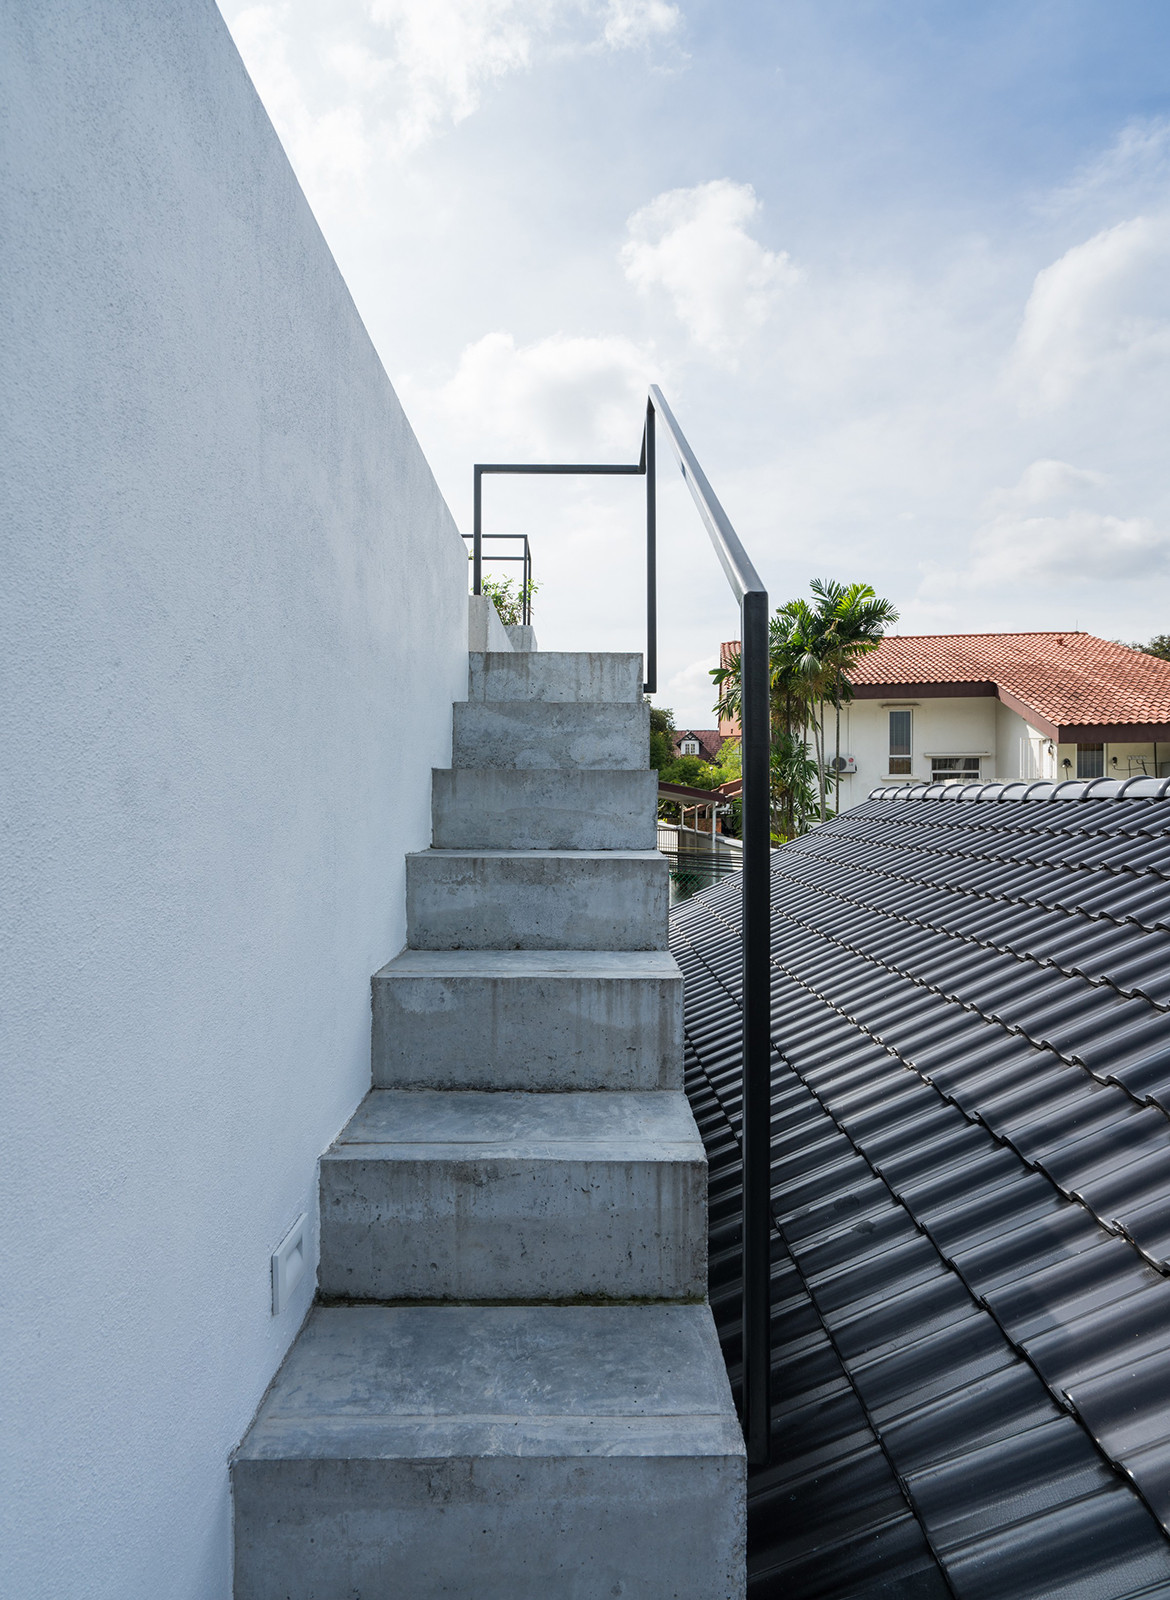 Jose House Fabian Tan Architects stairs